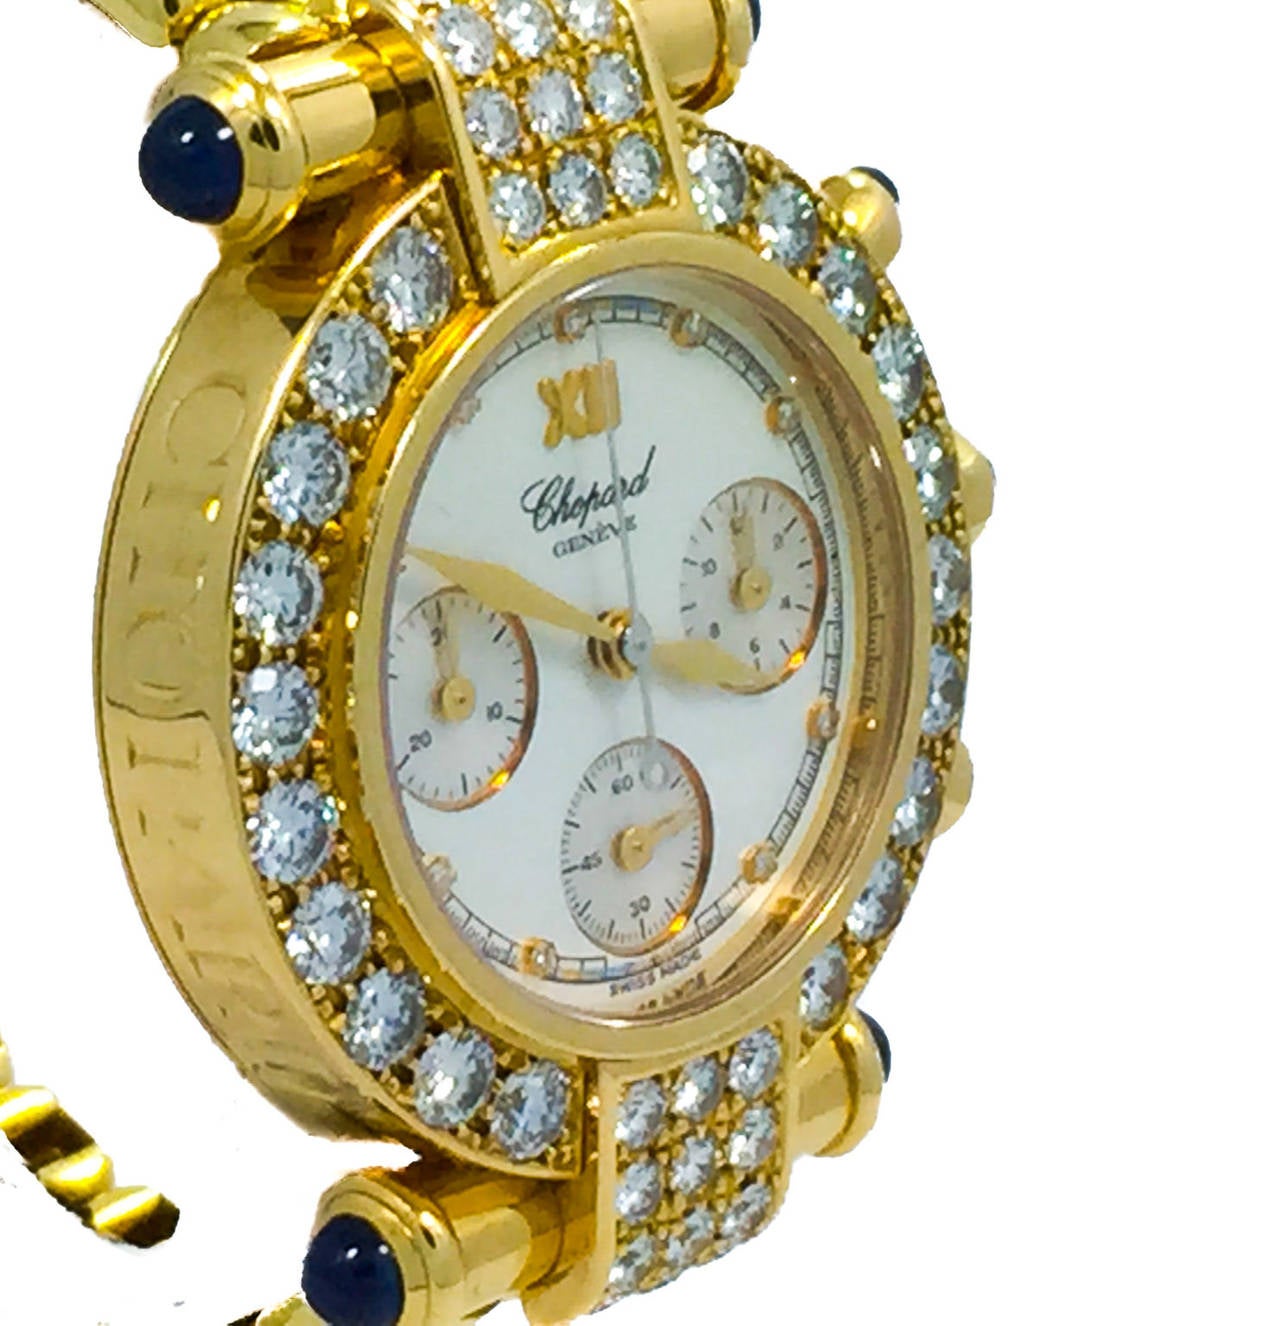 Women's Chopard Lady's Yellow Gold Diamond Bezel Imperial Chronograph Wristwatch